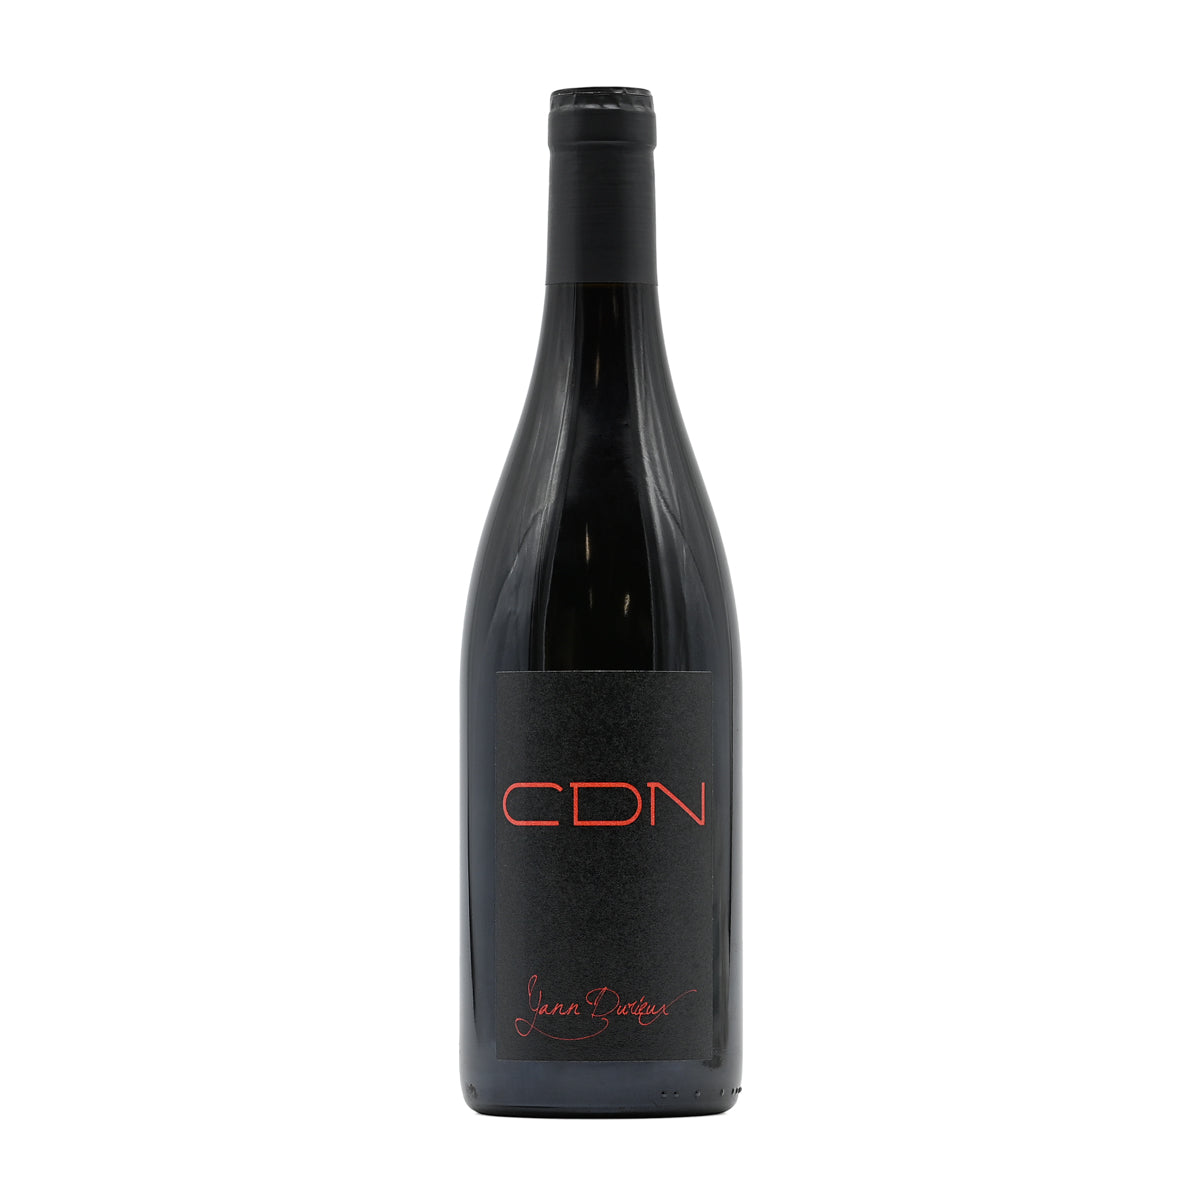 Yann Durieux VDF CDN 2019, 750ml French red wine, made from Pinot Noir; Vin de France, from Recrue Des Sens, Burgundy, France – GDV Fine Wines, Hong Kong